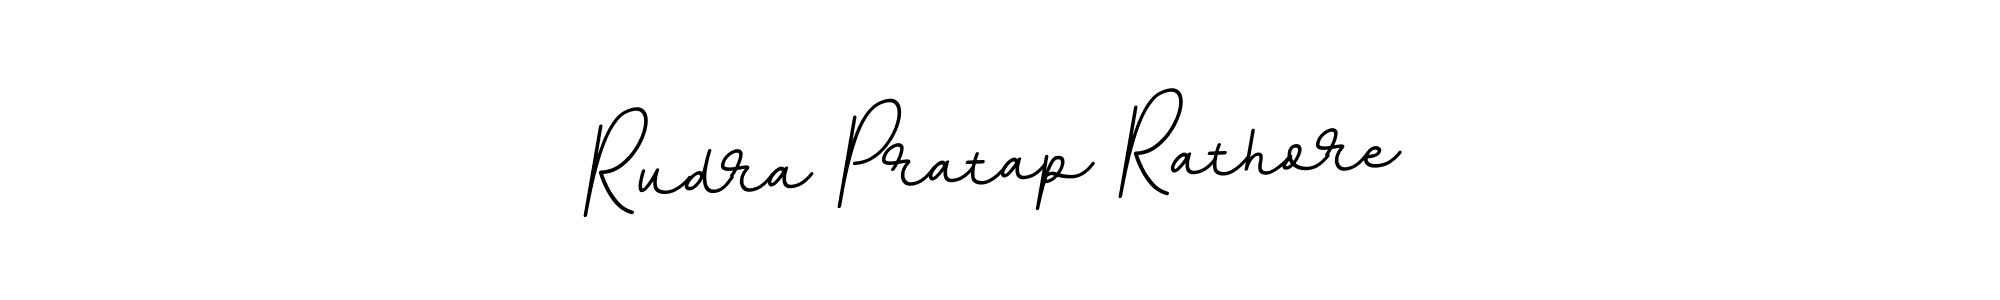 How to Draw Rudra Pratap Rathore signature style? BallpointsItalic-DORy9 is a latest design signature styles for name Rudra Pratap Rathore. Rudra Pratap Rathore signature style 11 images and pictures png